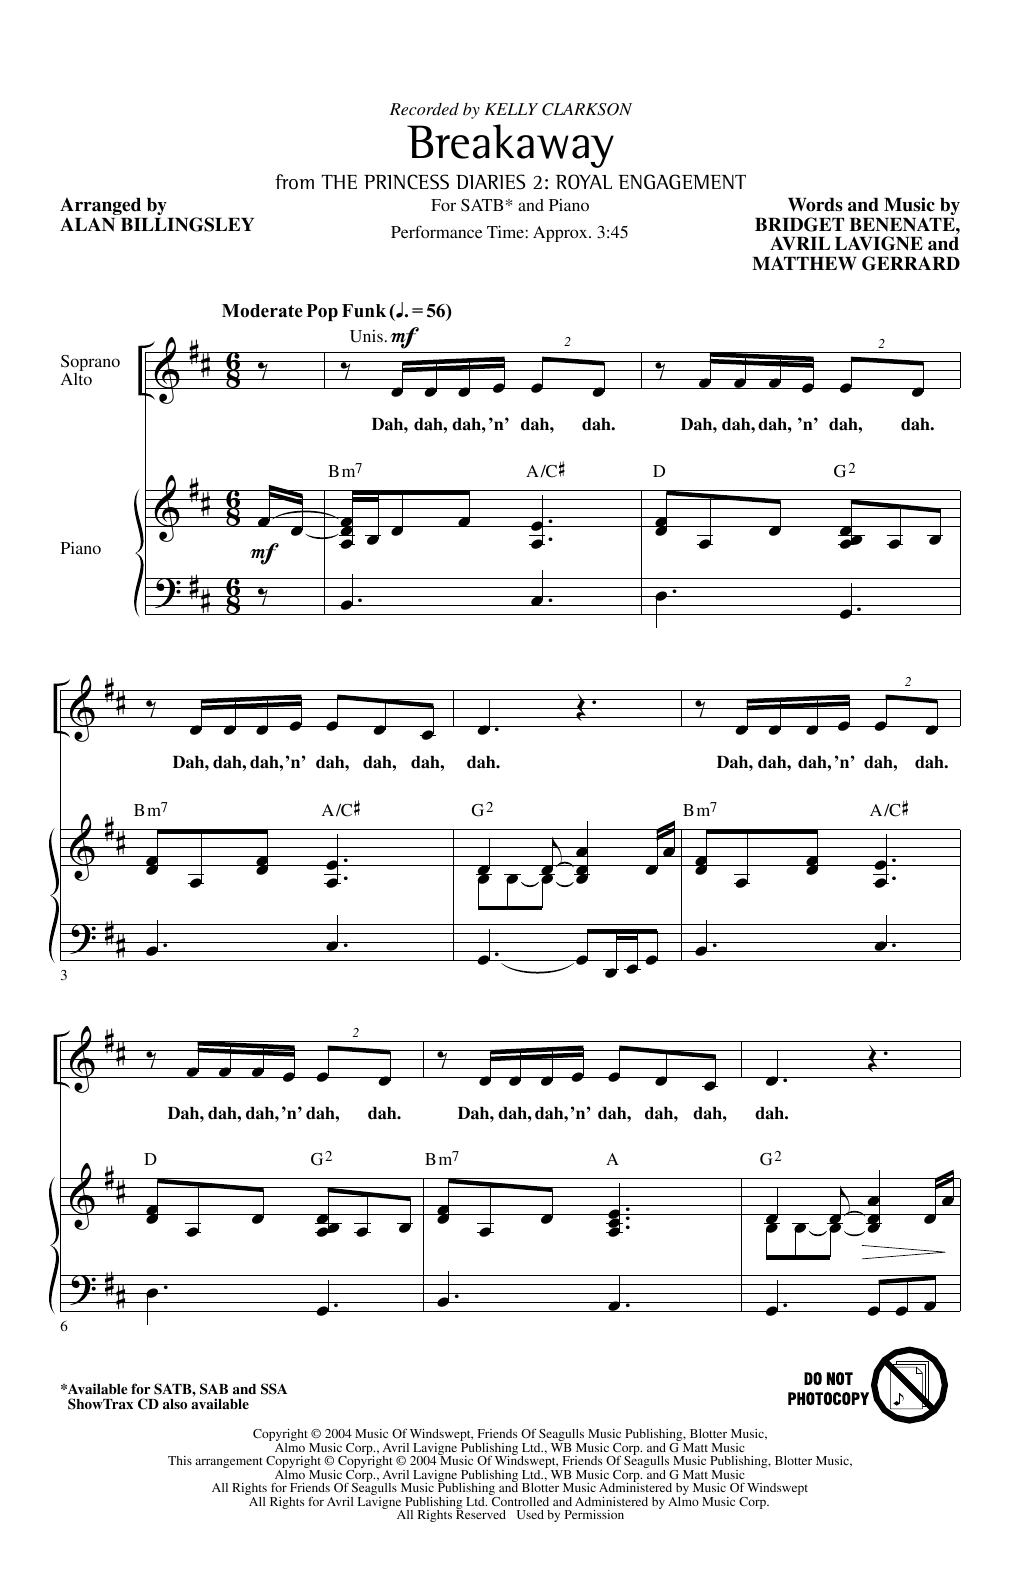 Download Kelly Clarkson Breakaway (arr. Alan Billingsley) Sheet Music and learn how to play SATB Choir PDF digital score in minutes